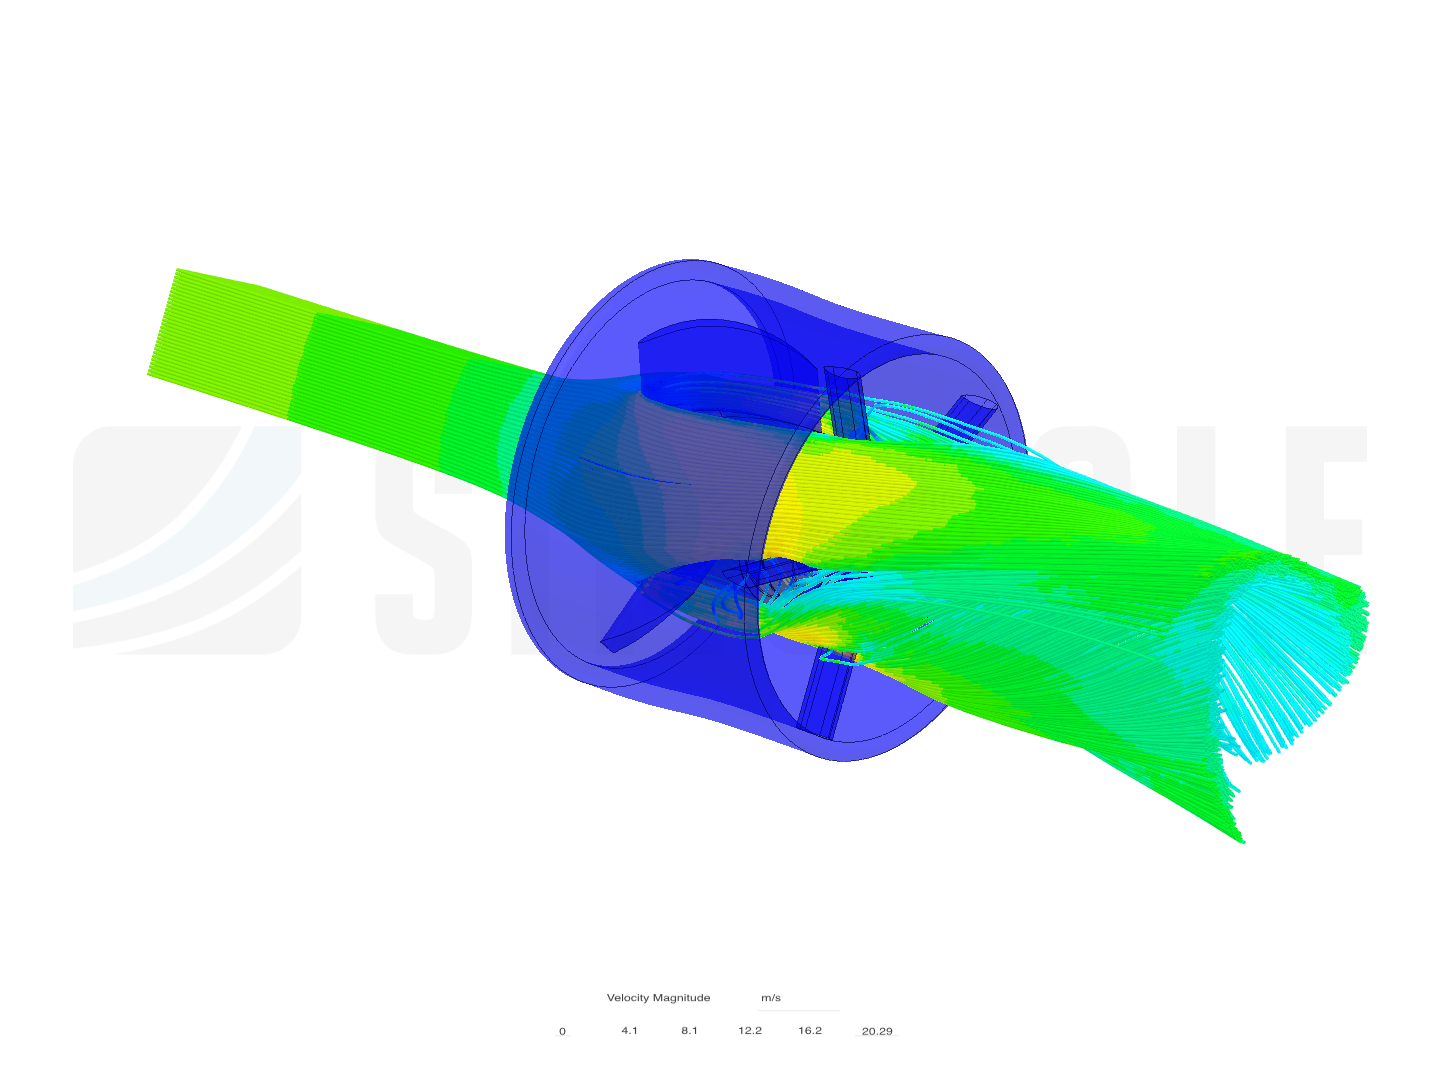 Propeller image